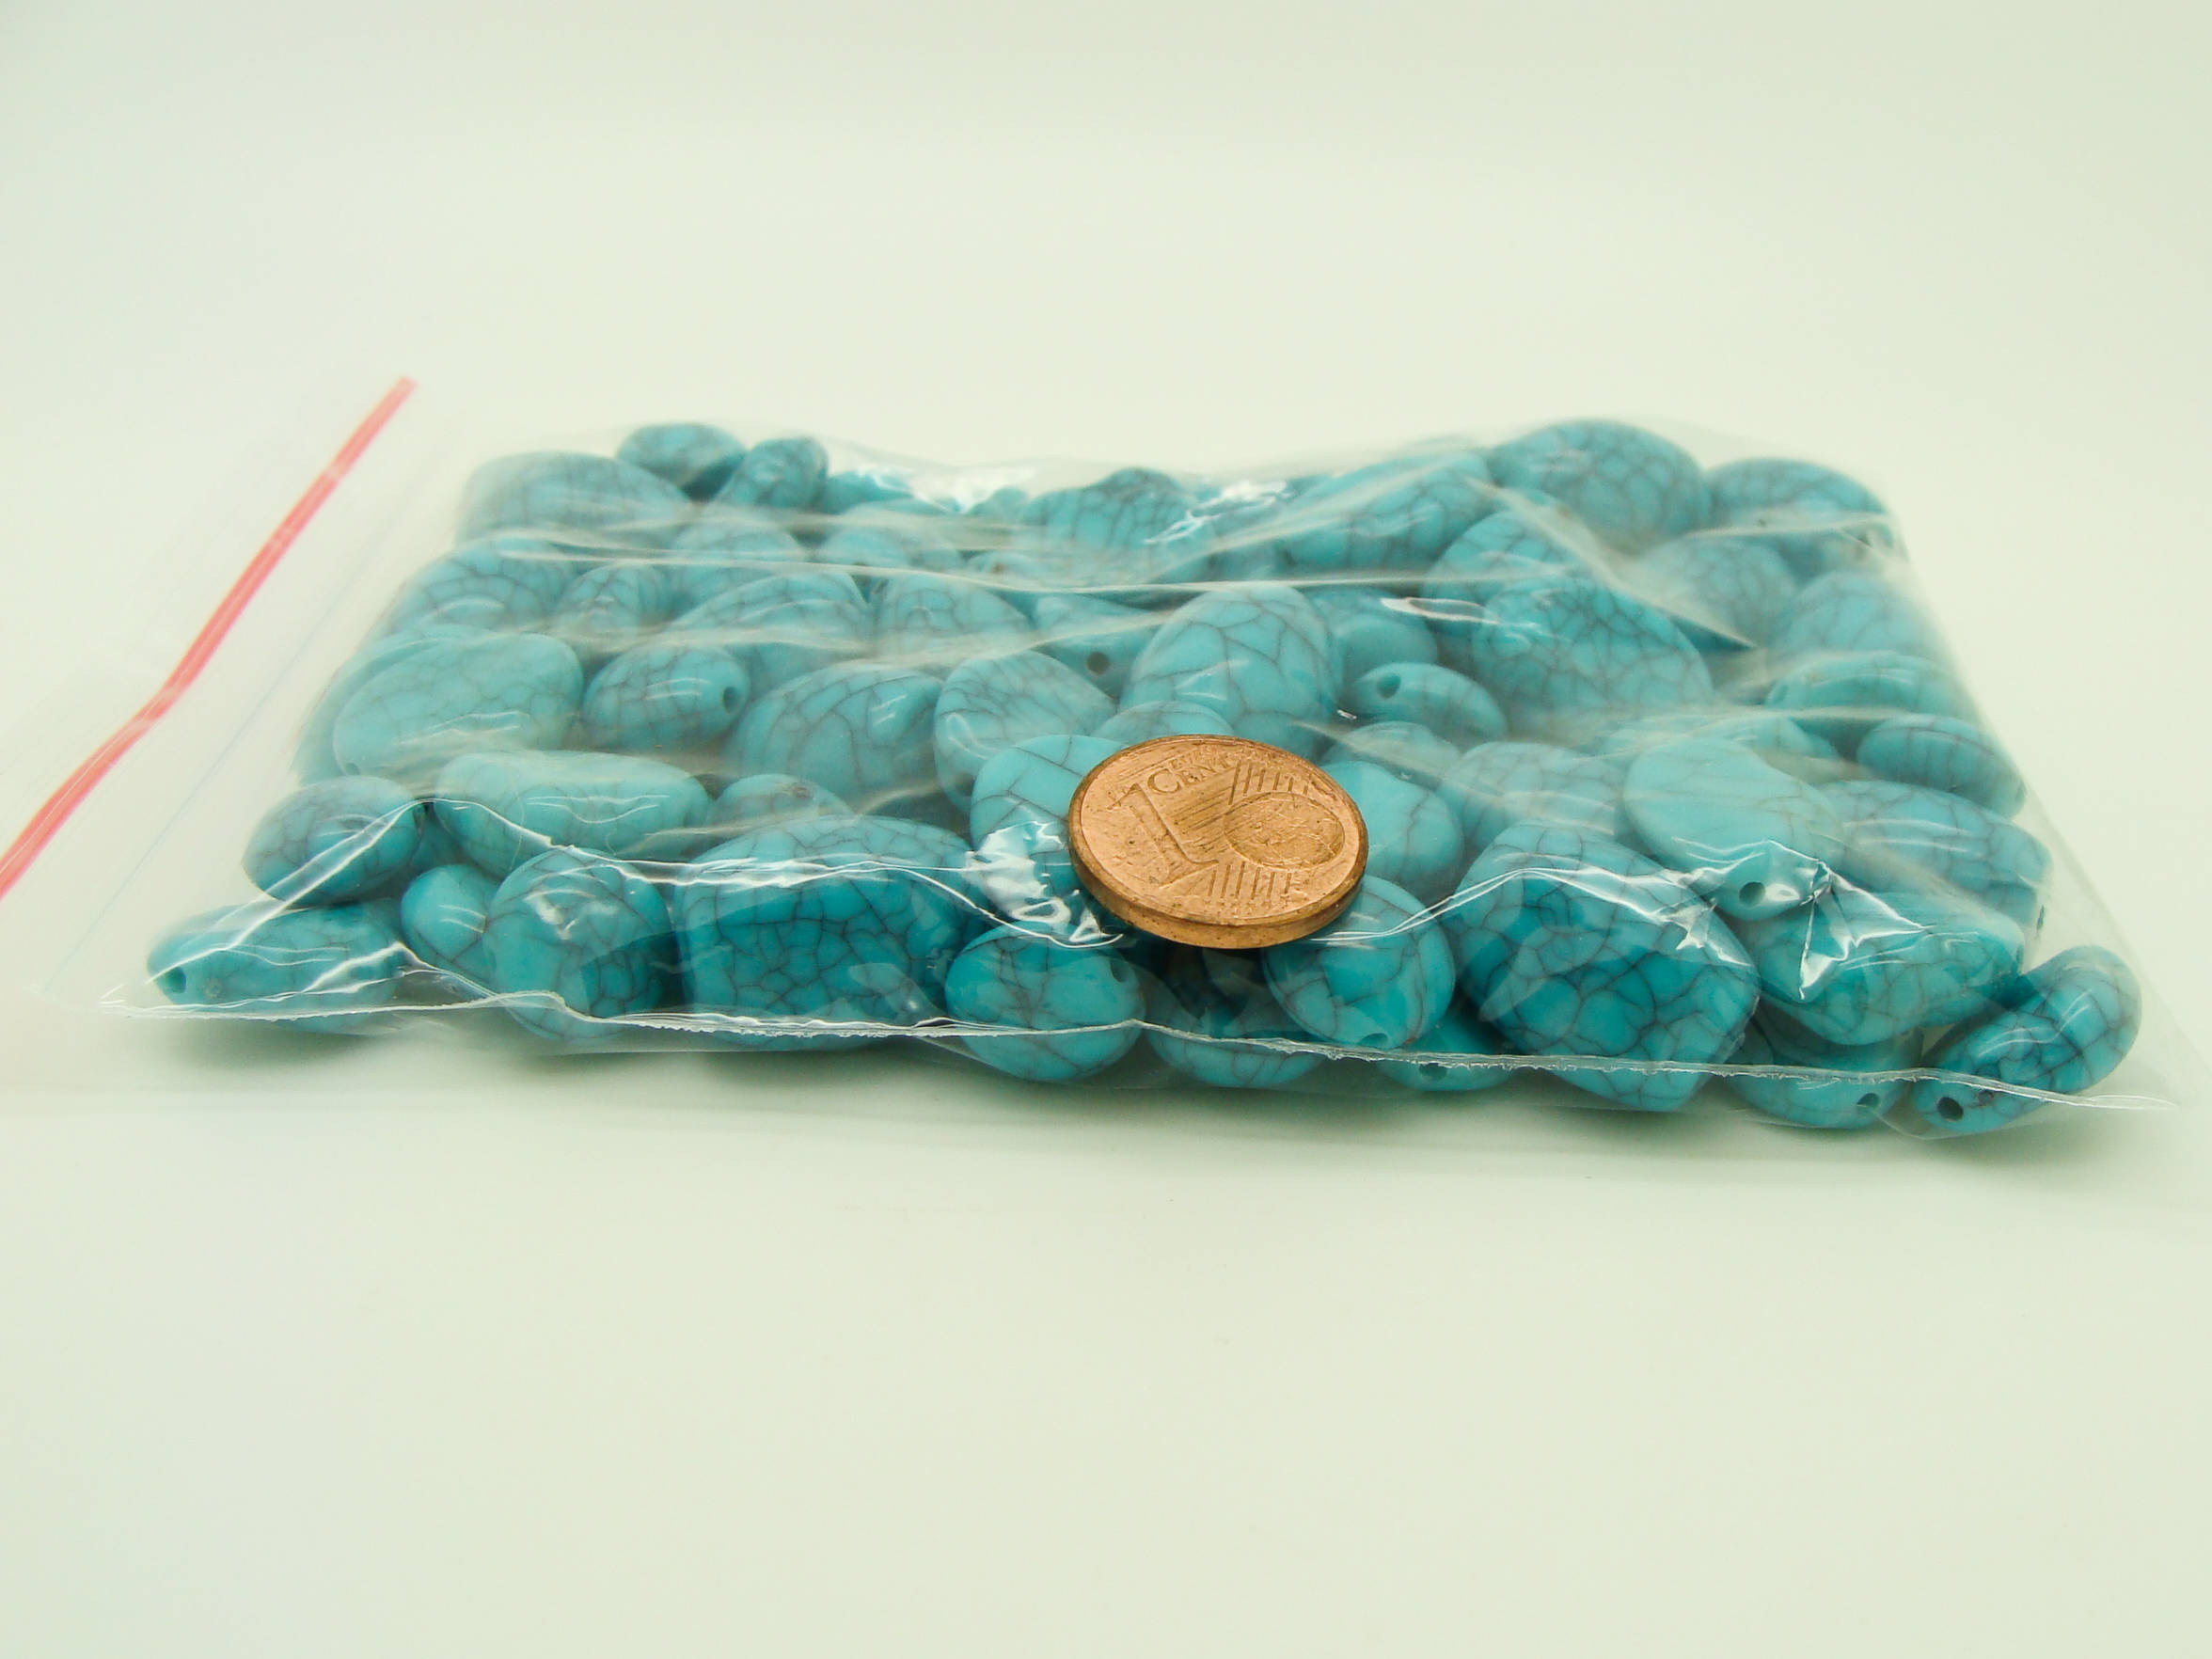 acry-75g-turquoise perle acrylique aspect turquoise pierre